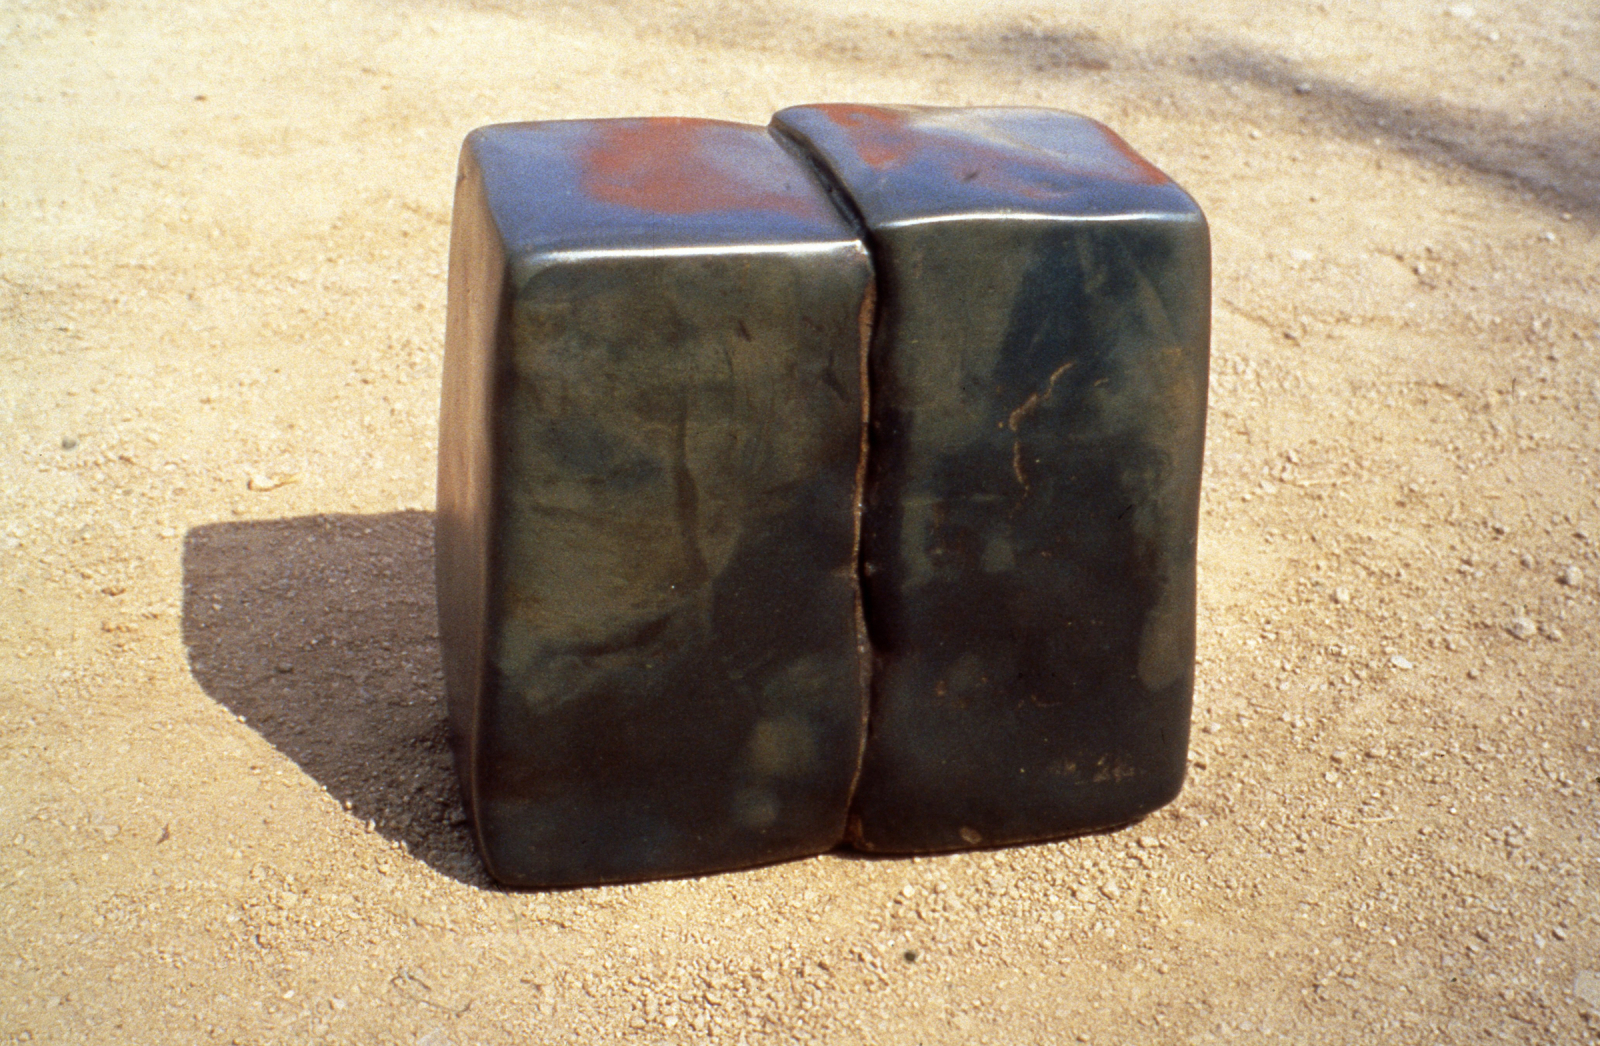 Untitled-85031, 1985, Bronze, 16x28x26cm